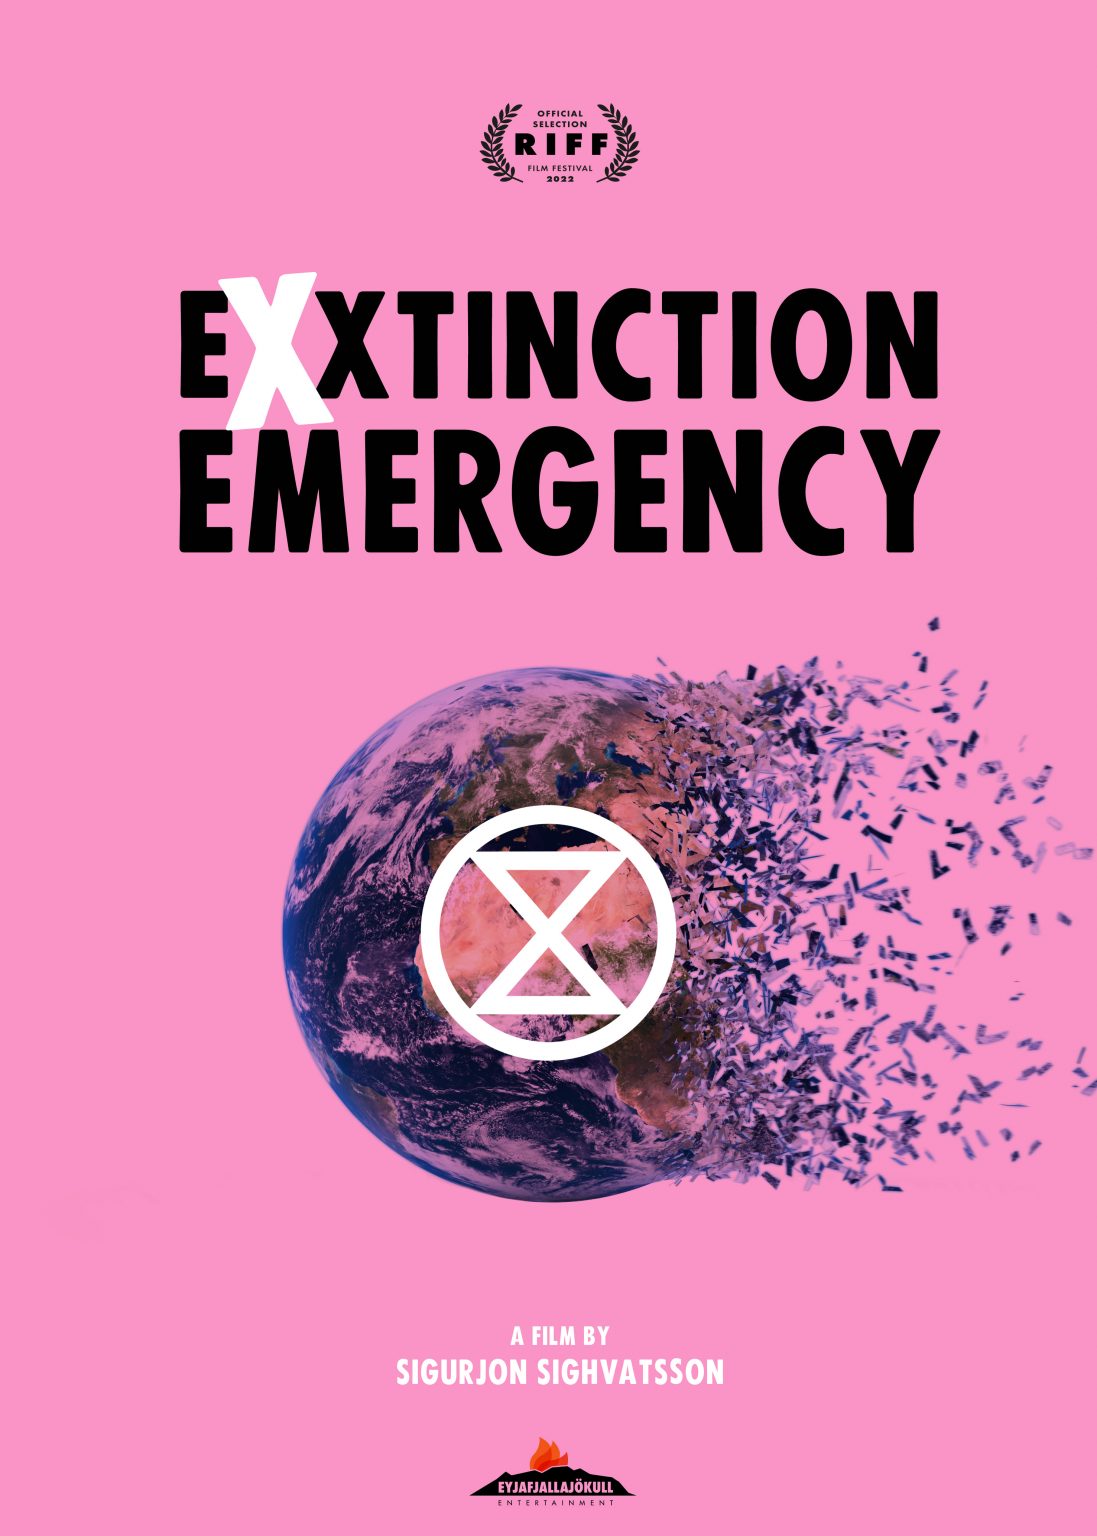 Exxtinction Emergency